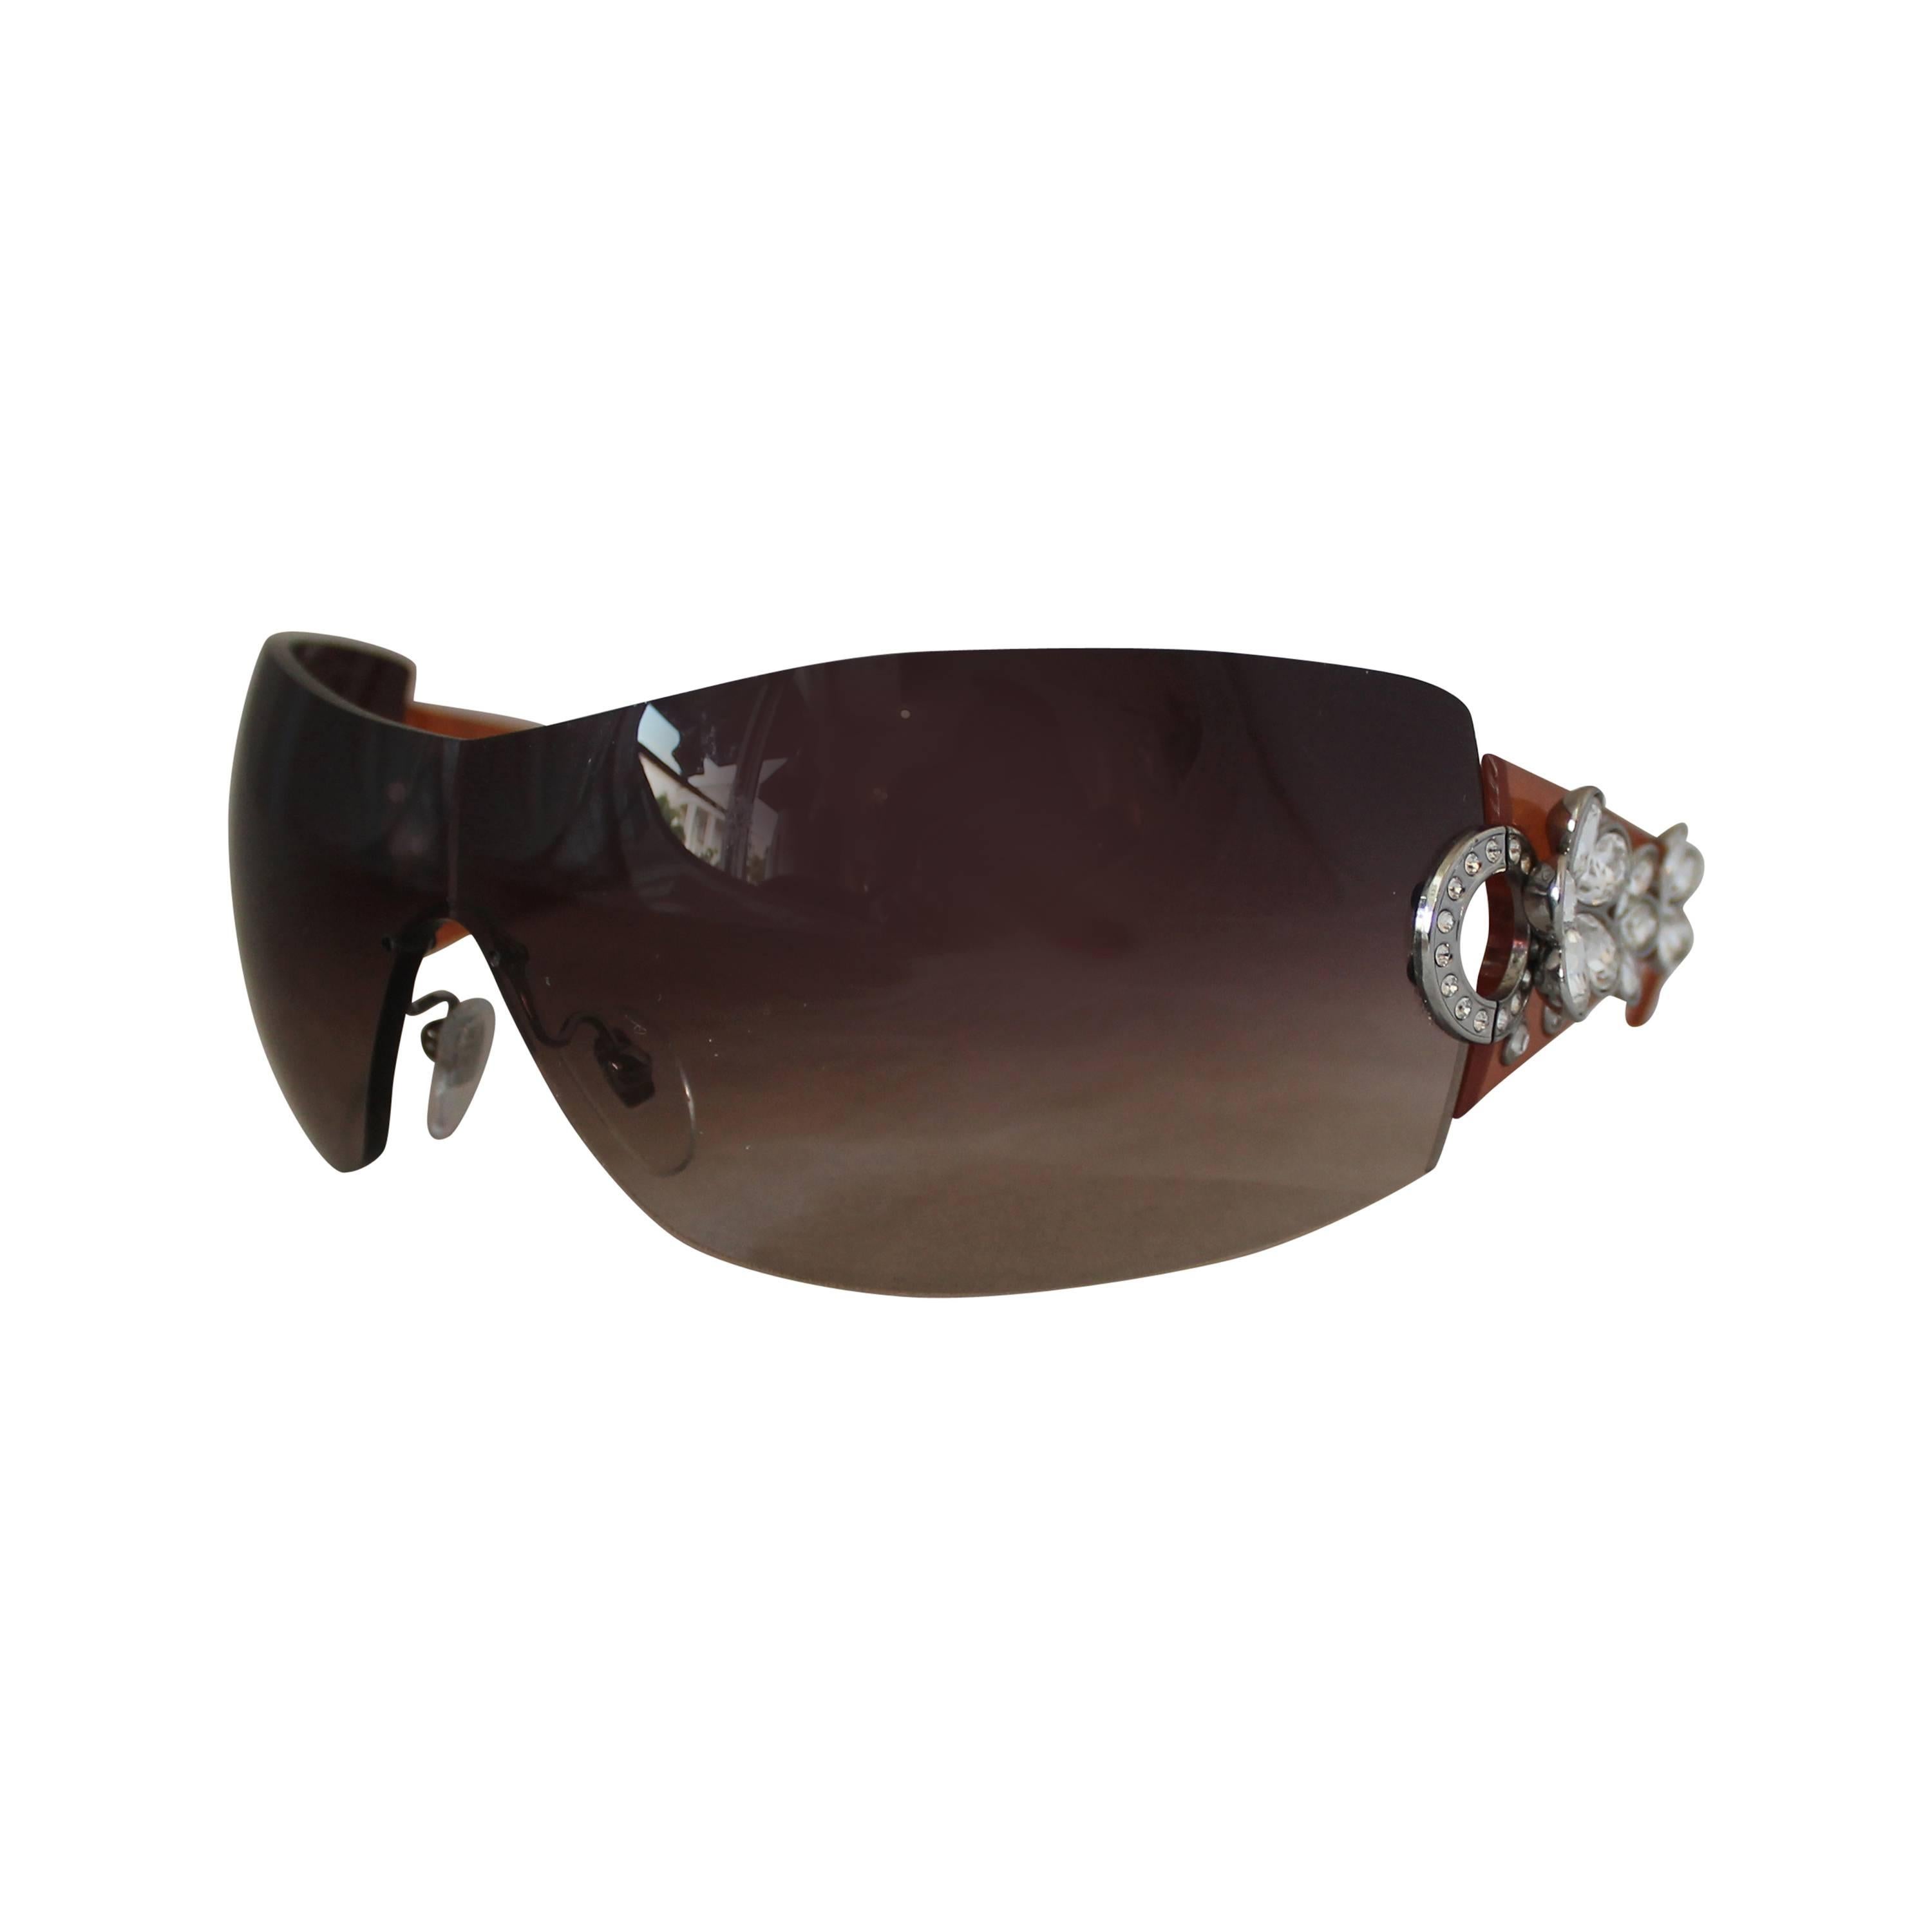 Bulgari Light Brown Sunglasses w/ Crystal Flower and Rhinestone Detail 